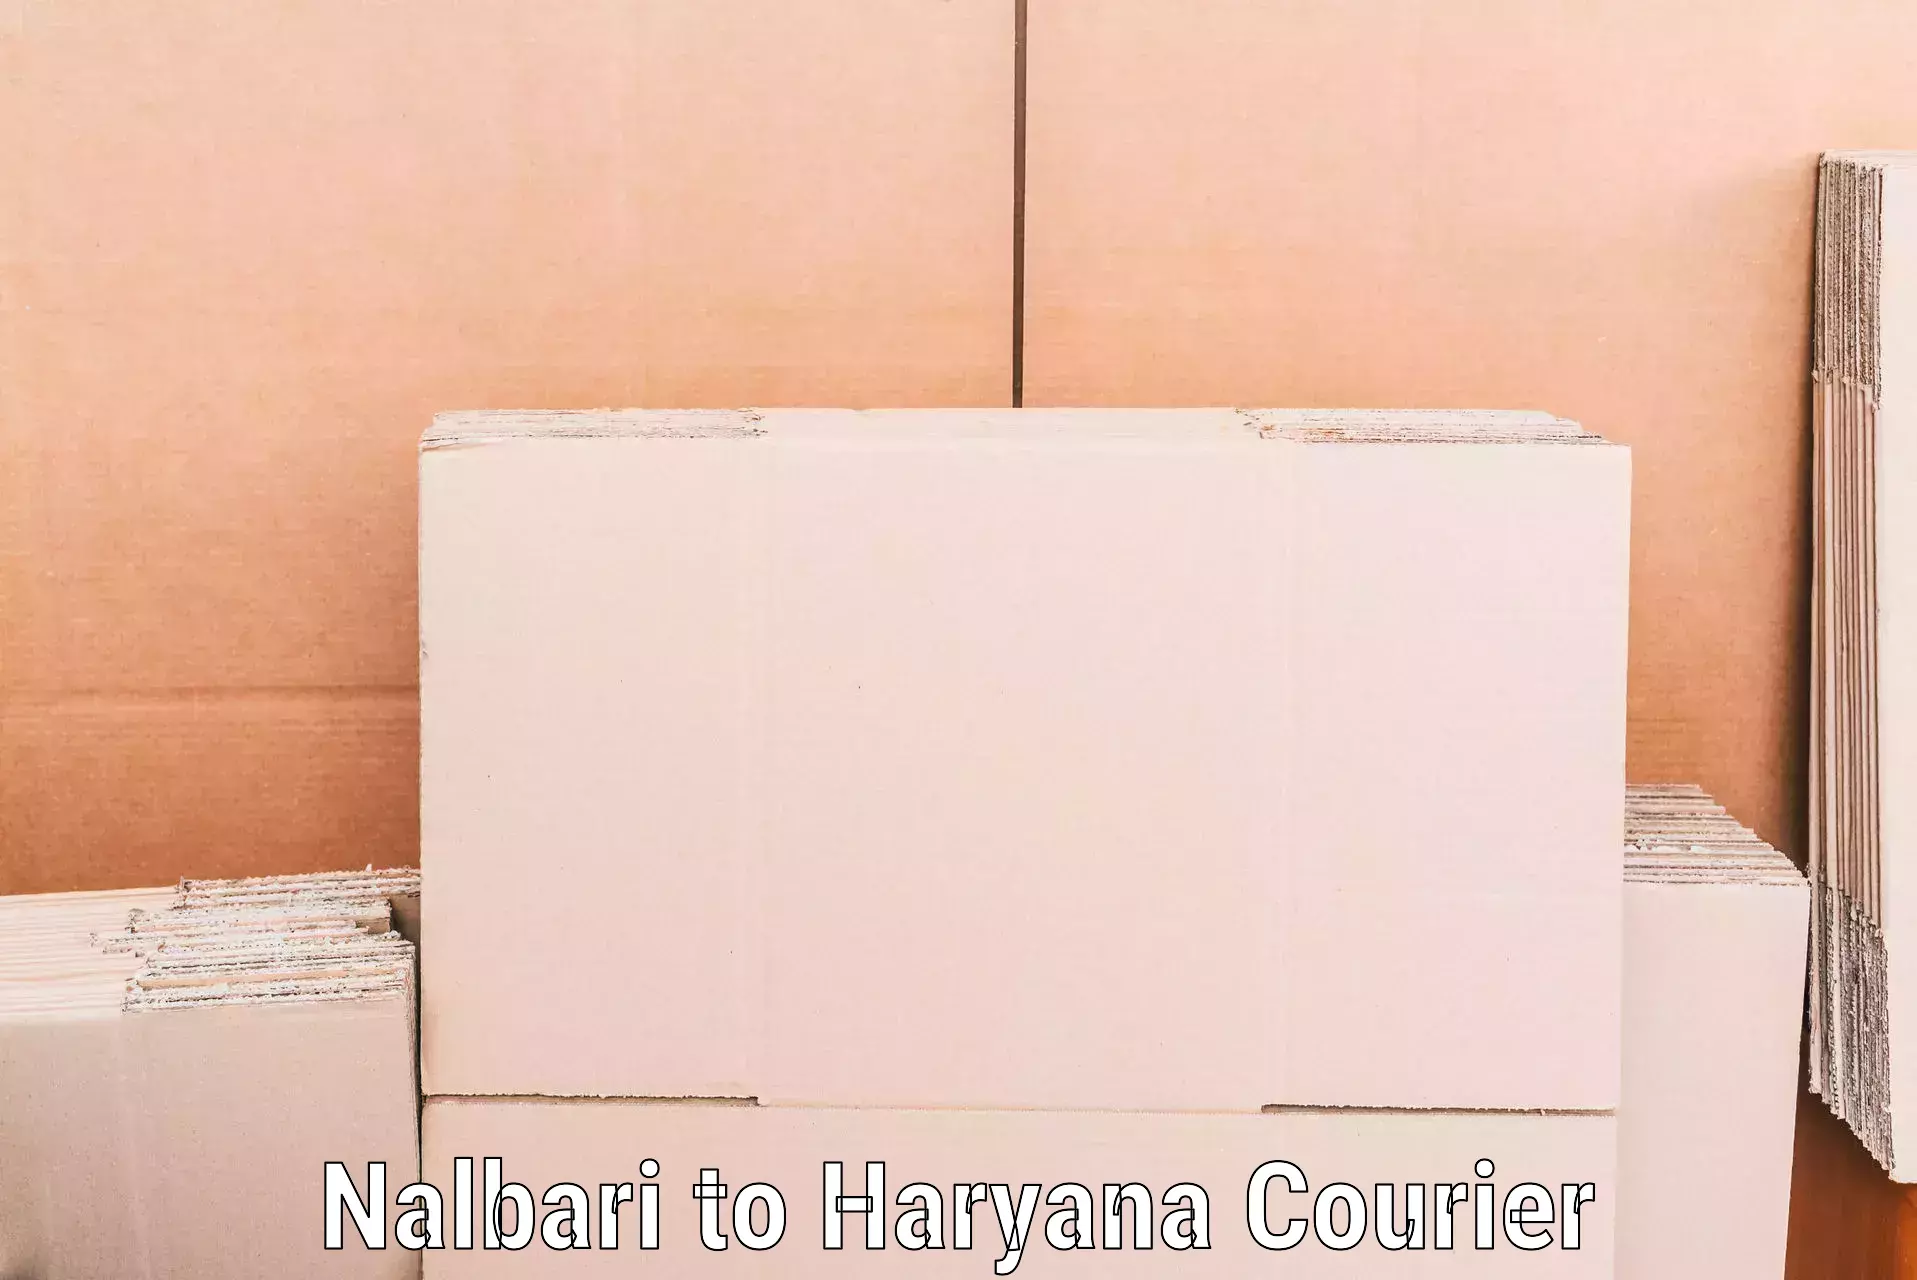 Efficient moving company Nalbari to Sonipat